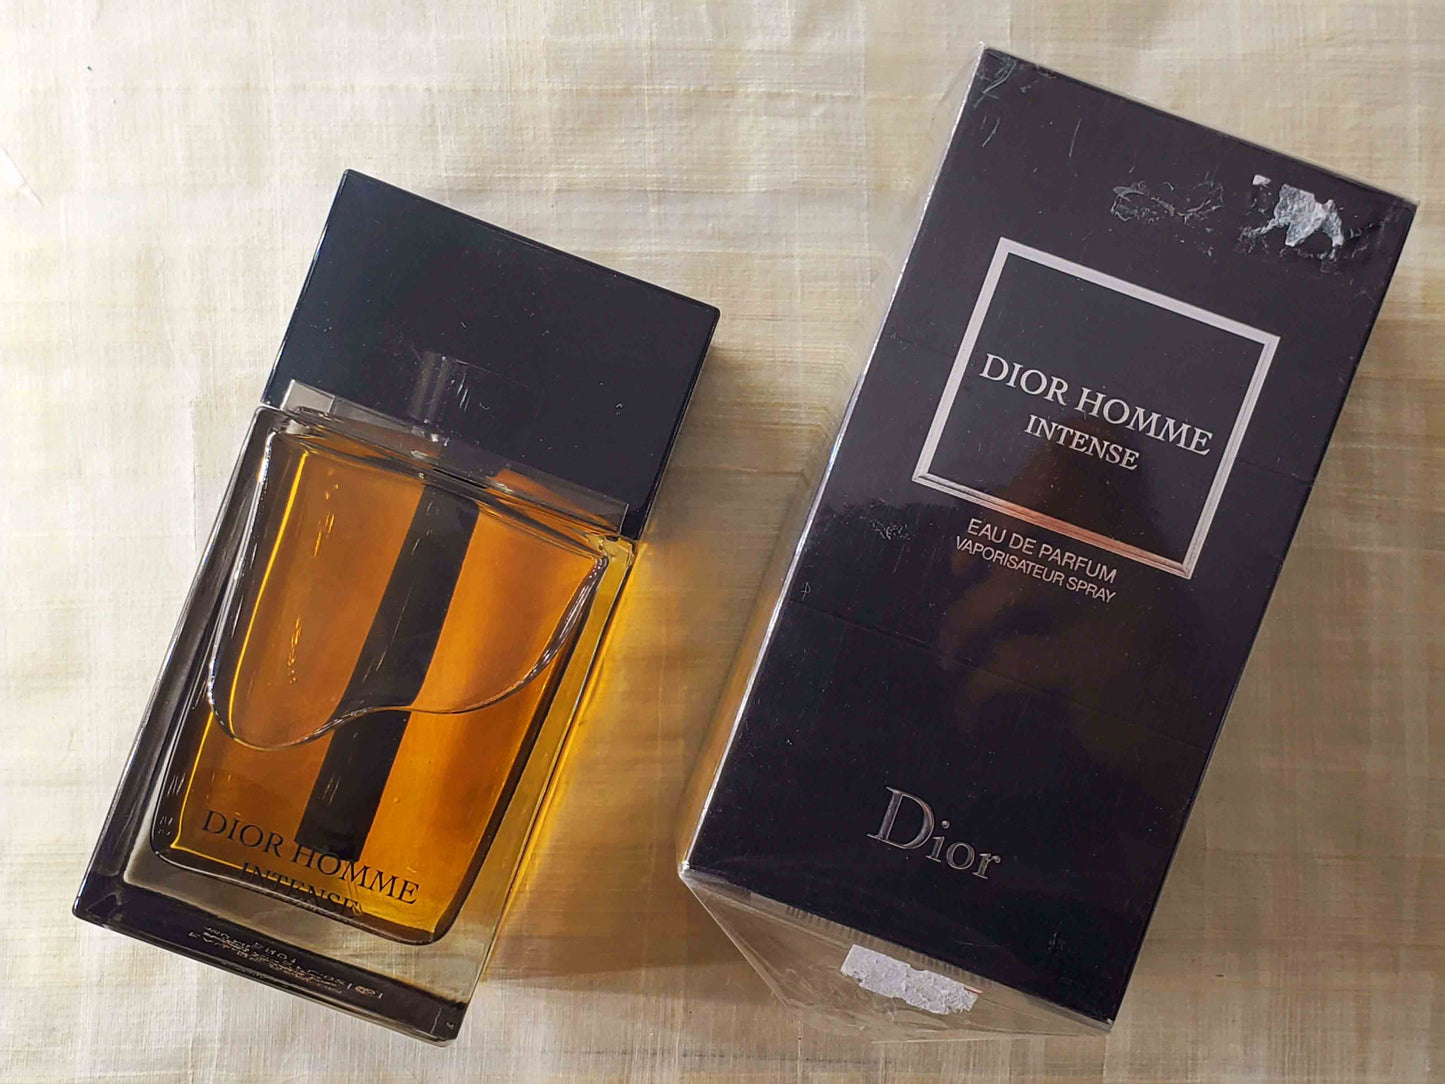 Dior Homme Intense By Christian Dior Eau De Parfum Spray 1.7 Oz Men